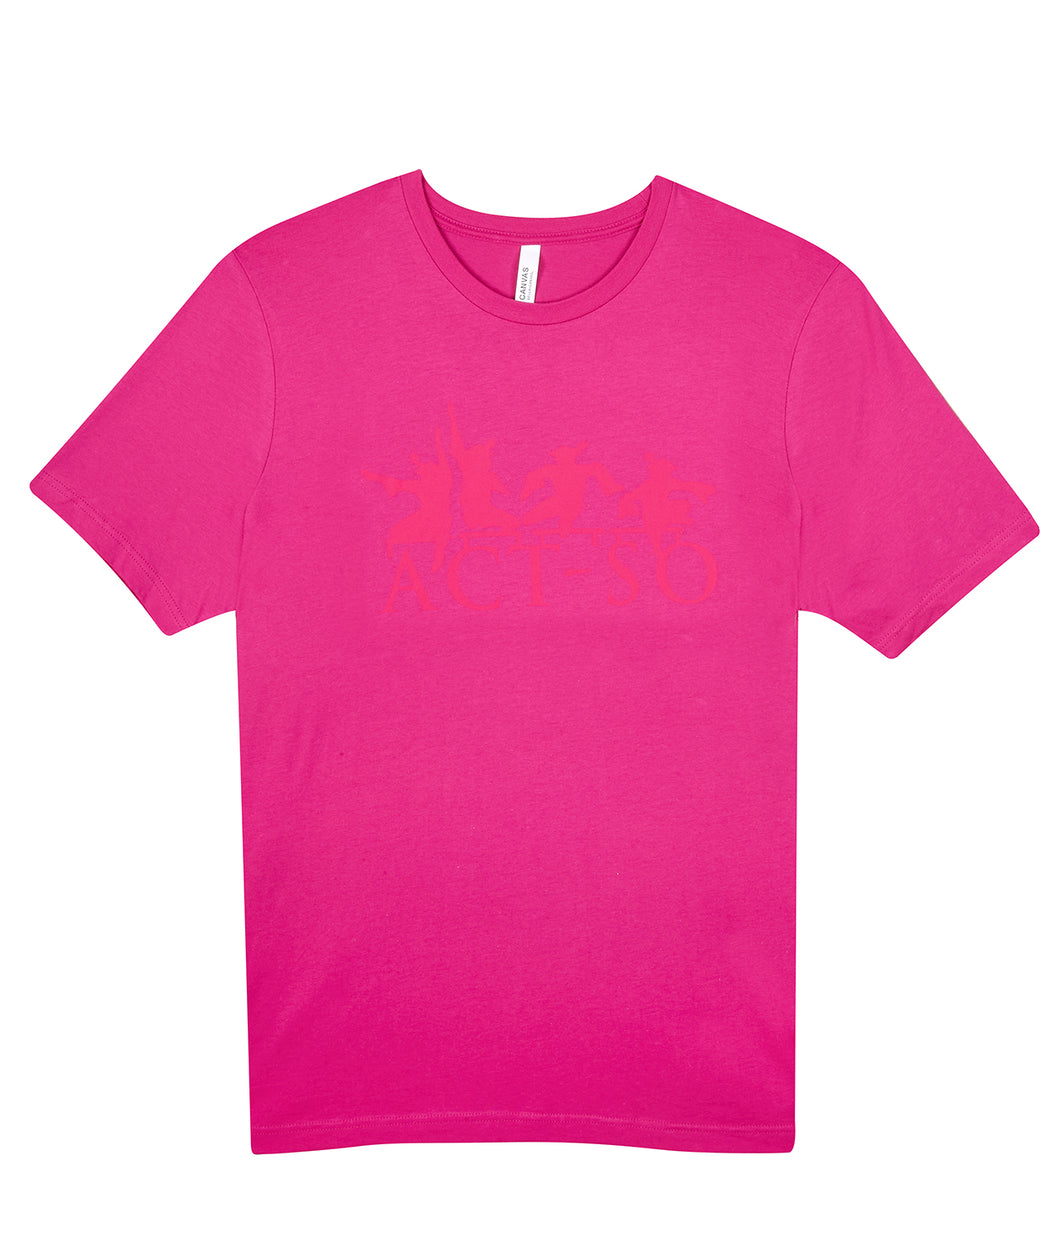 ACT-SO pink shirt with pink logo